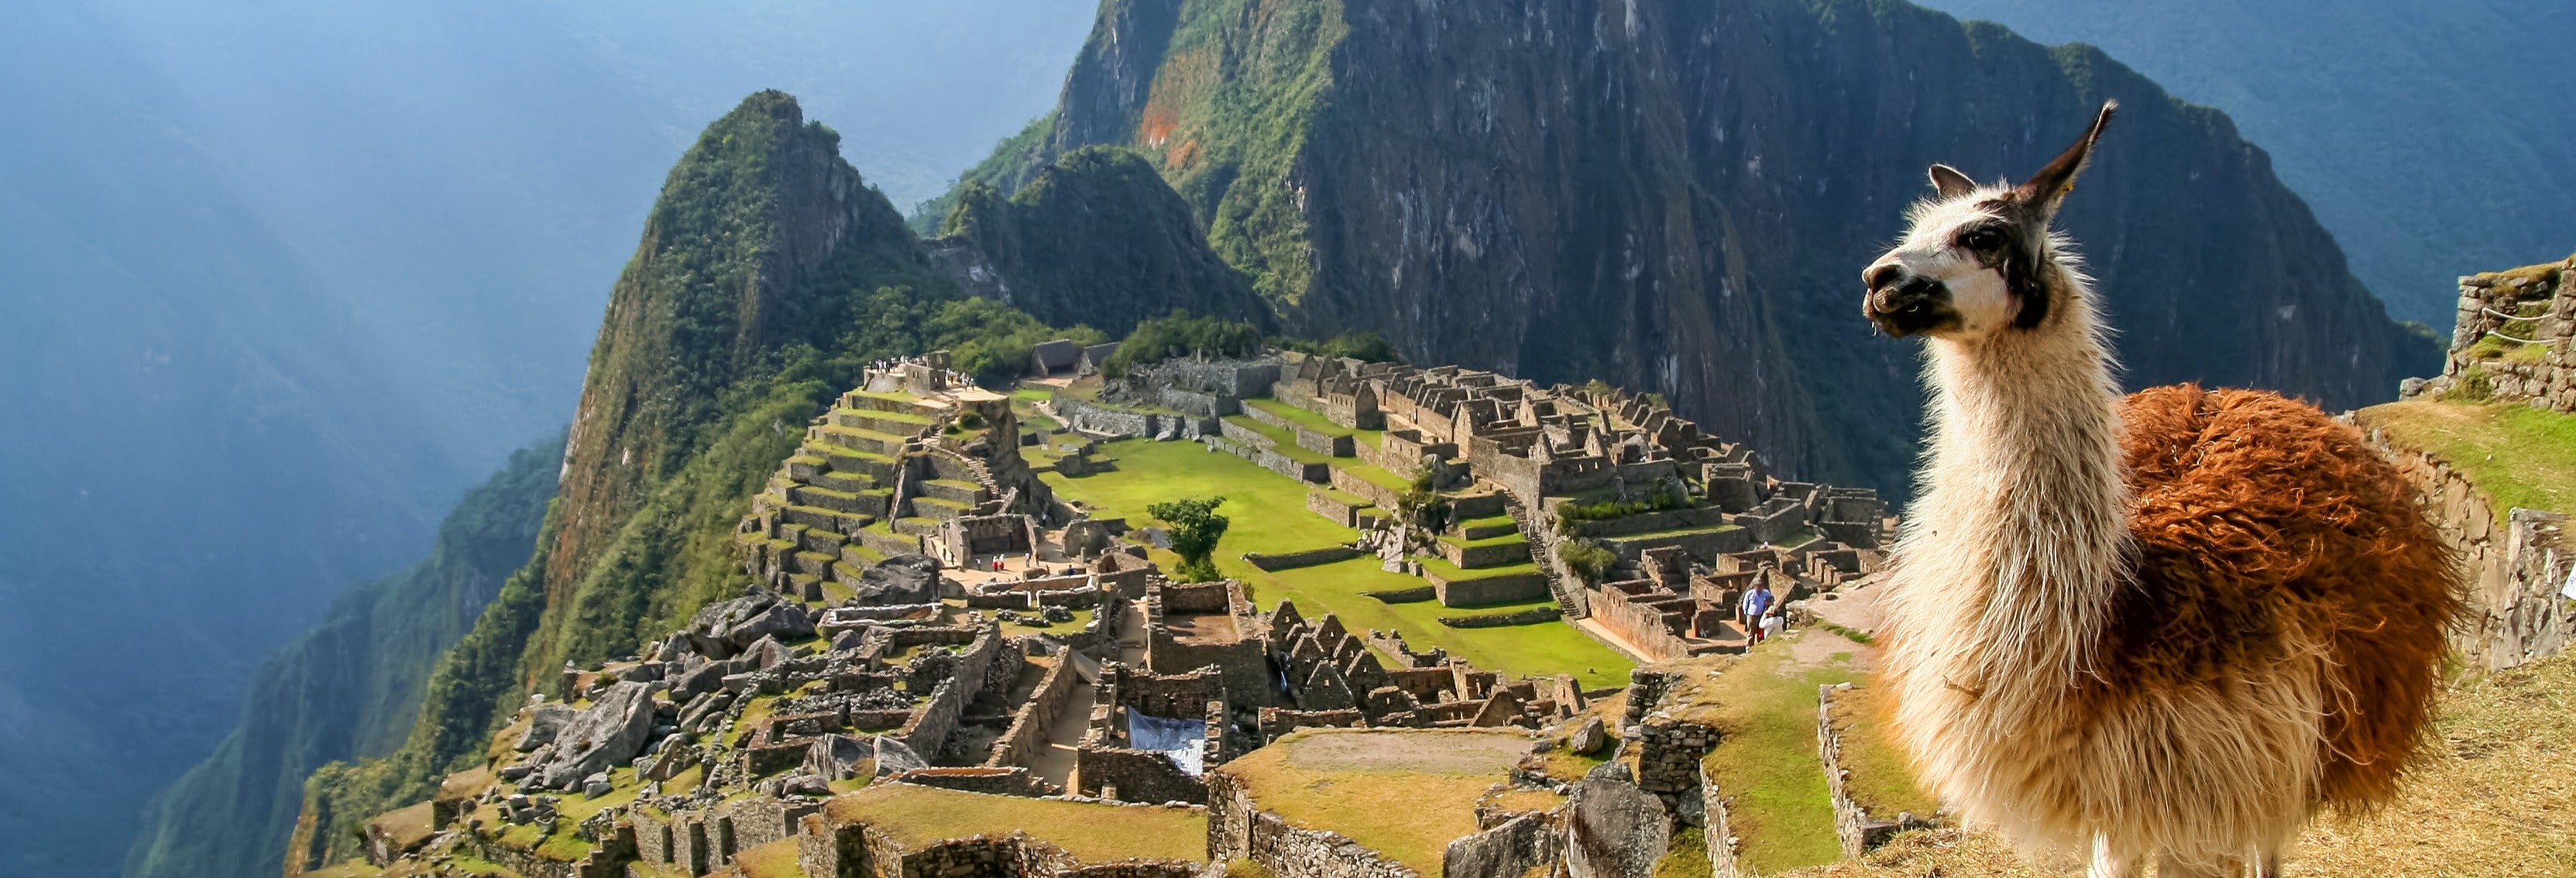 Excursão a Machu Picchu + Montanha Machu Picchu